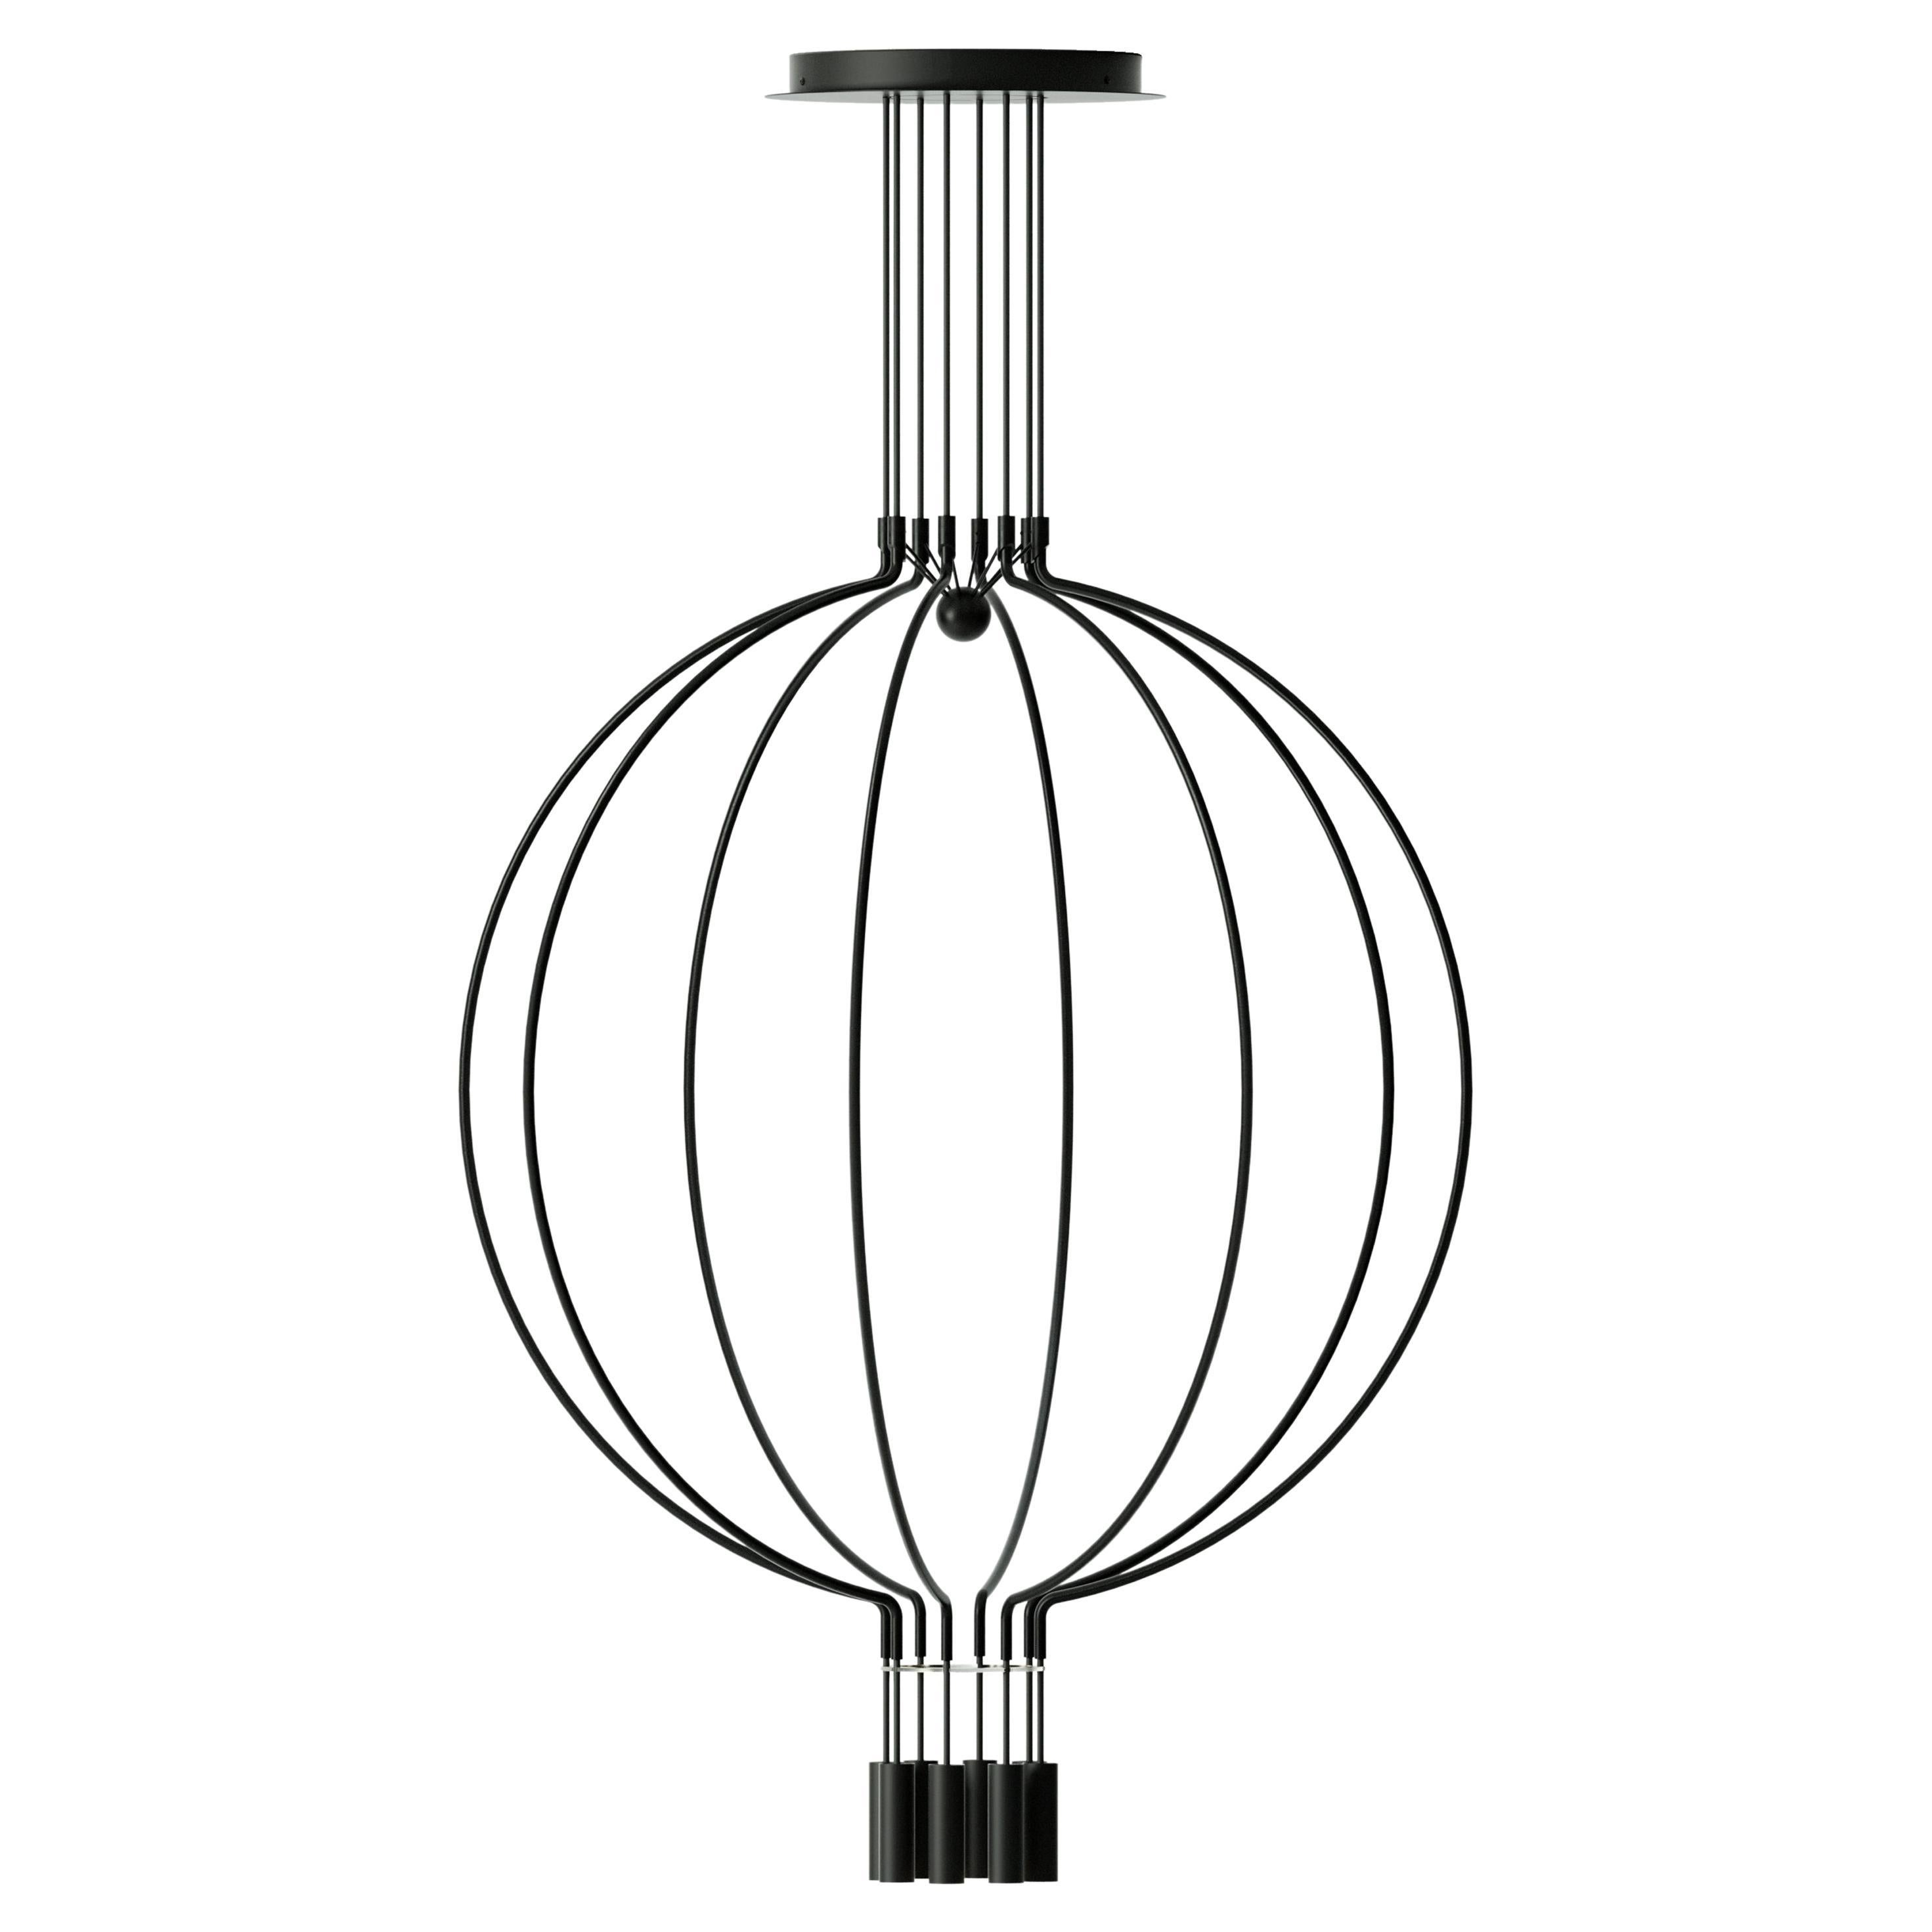 Axolight Liaison Model G8 Pendant Lamp in Black/Black by Sara Moroni For Sale